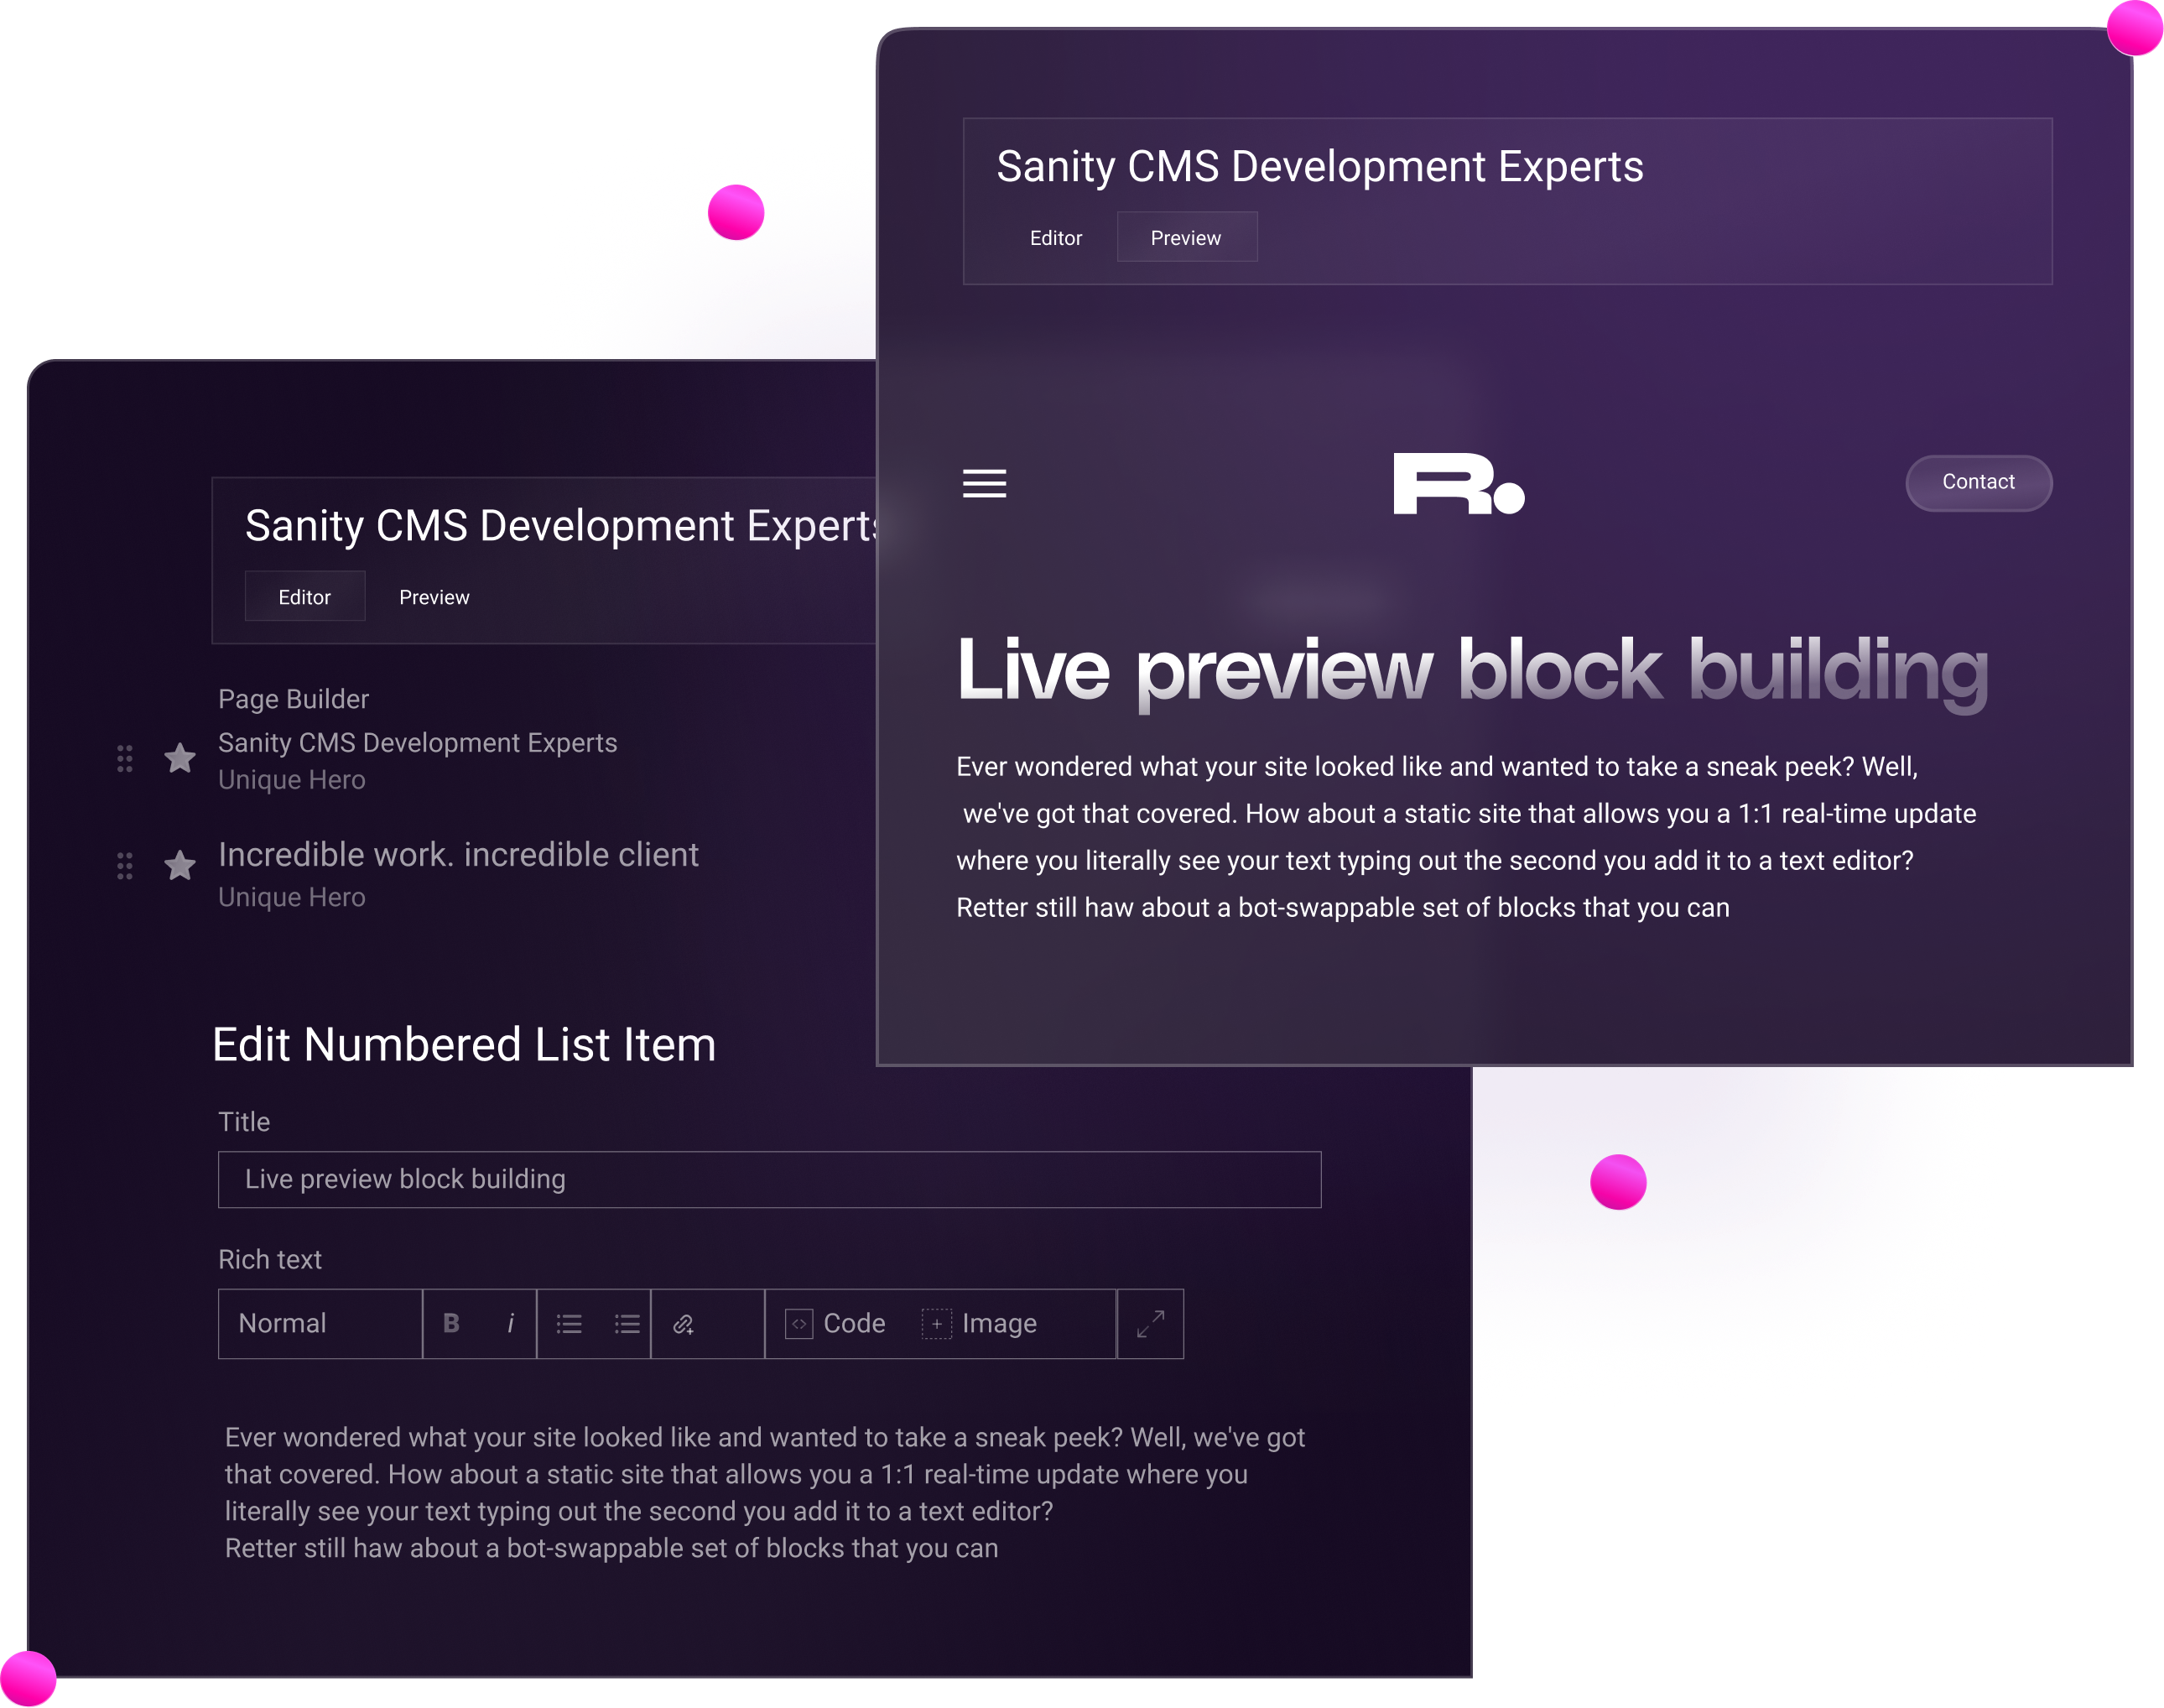 Live preview block building